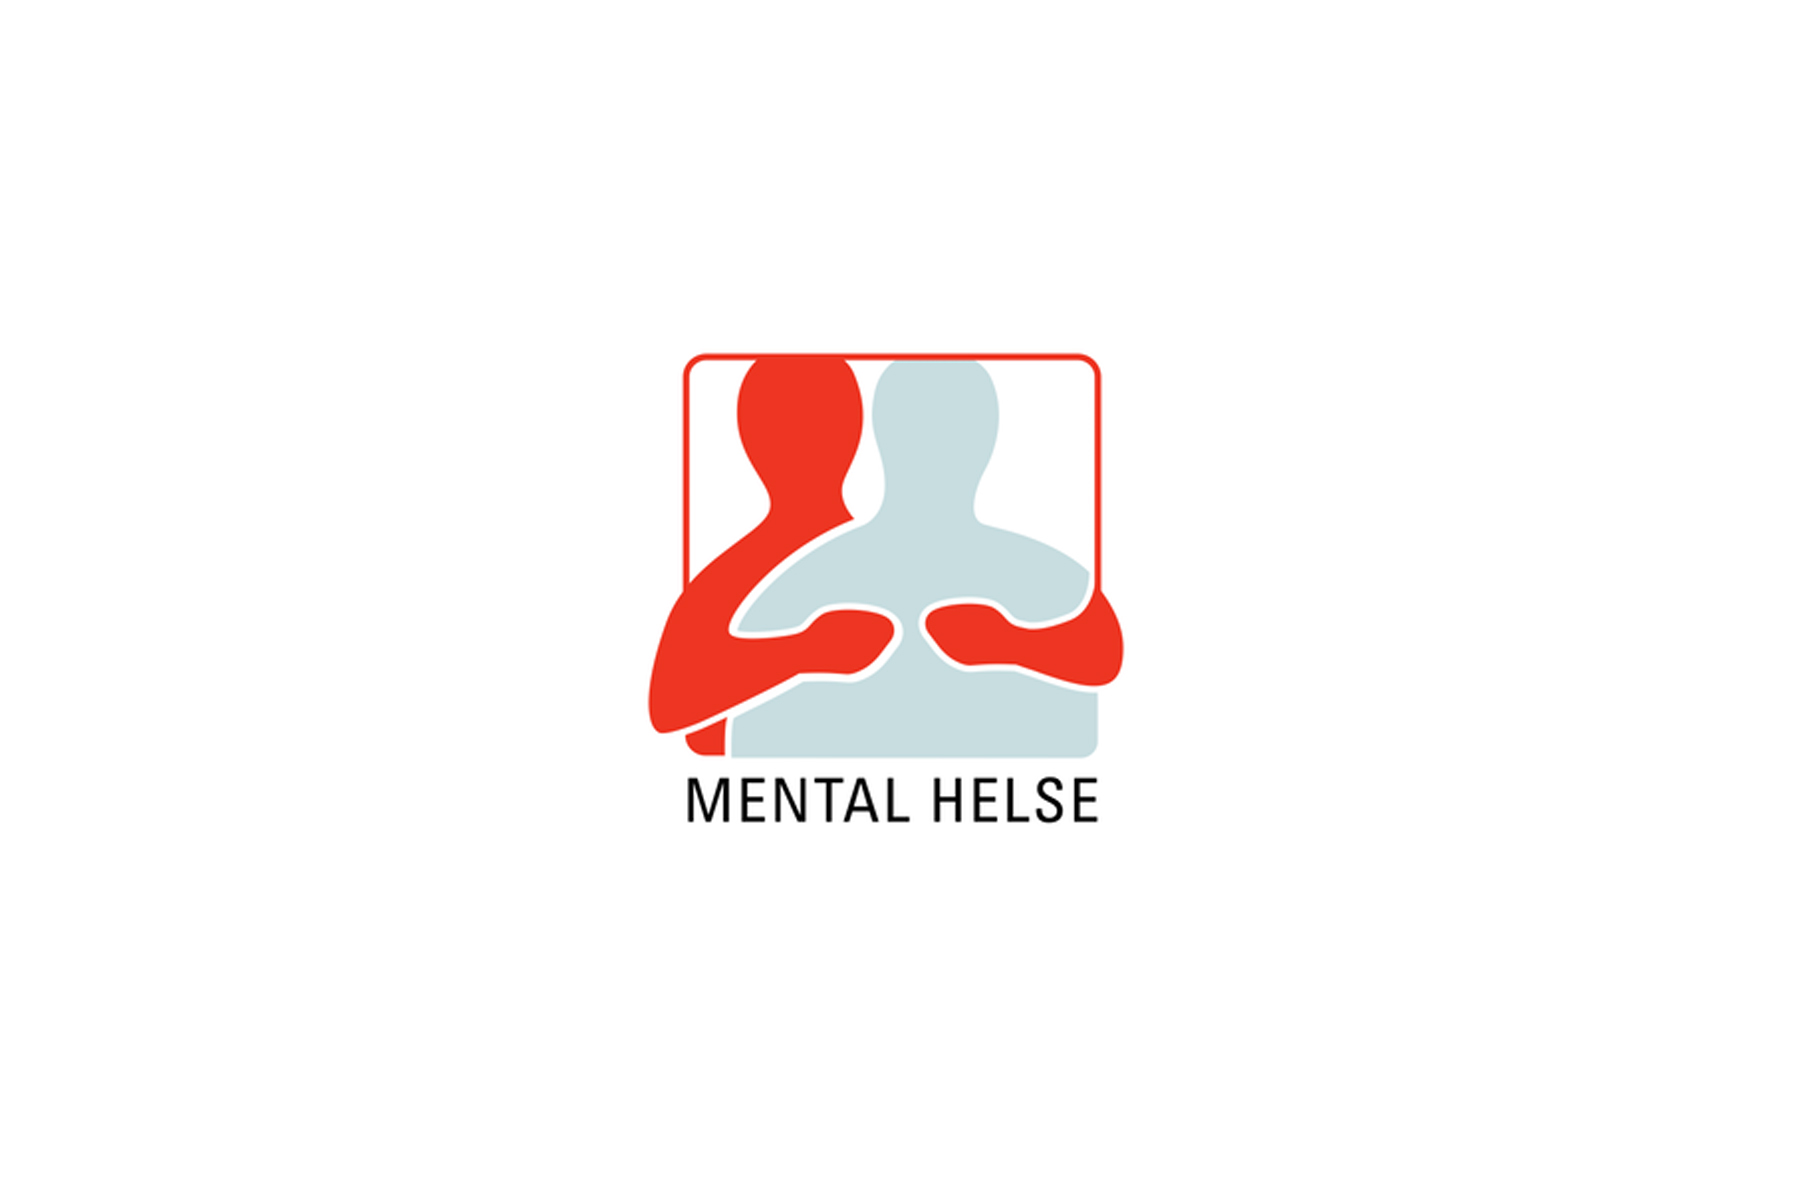 Mental helse logo